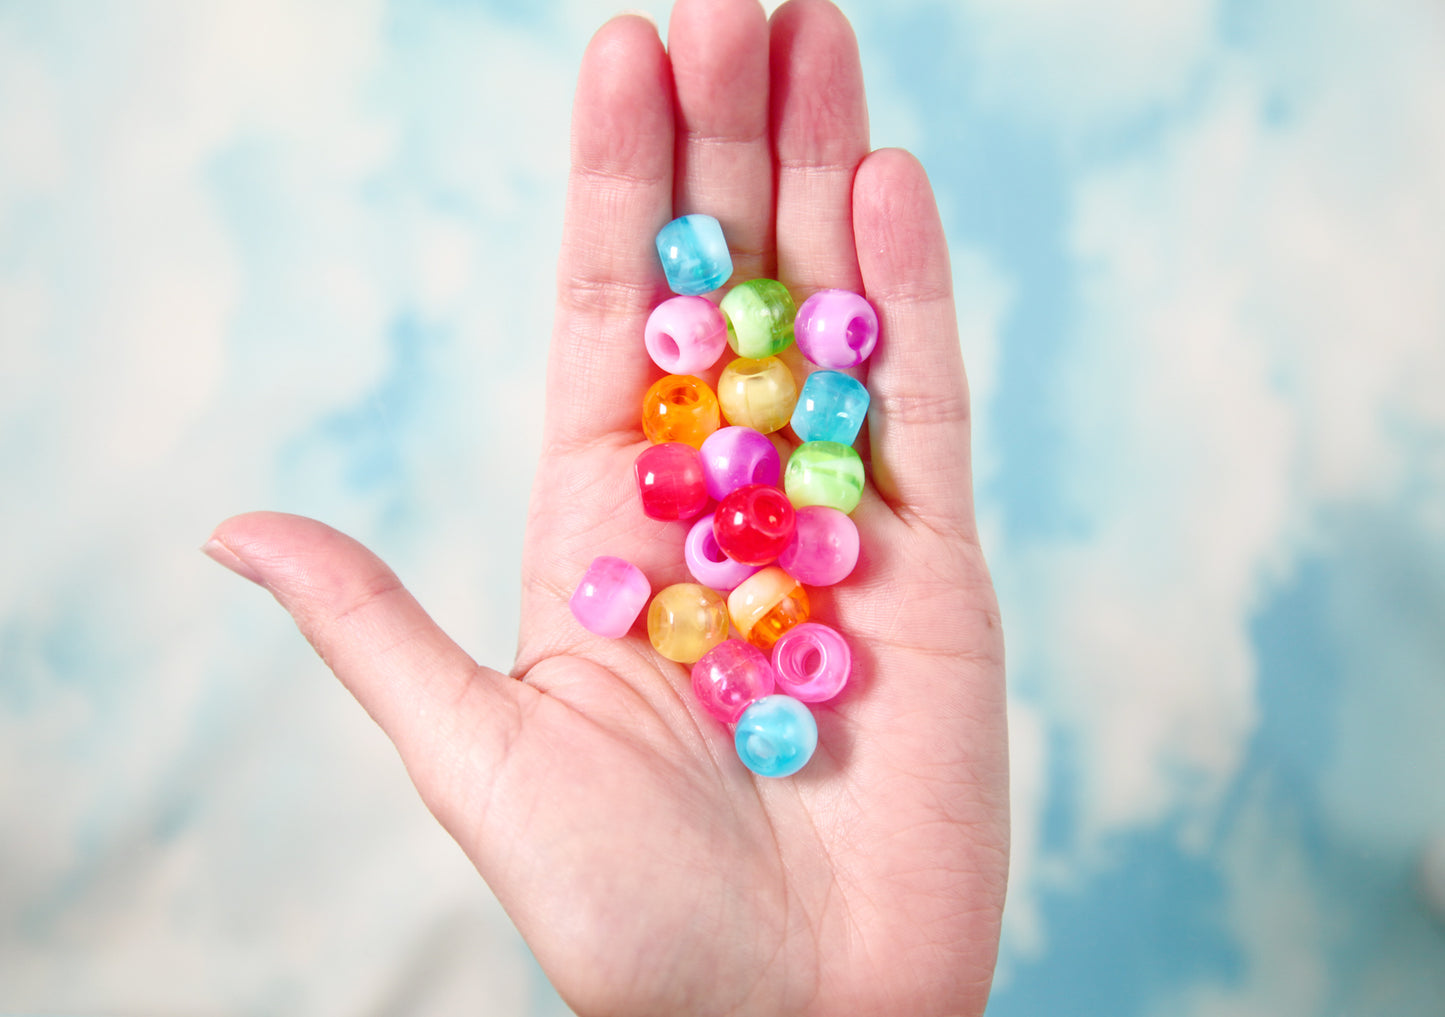 Large Hole Beads - 12mm Marble Two Tone Acrylic Beads with Large Holes, Pony Beads, mixed color, medium size beads - 50 pc set